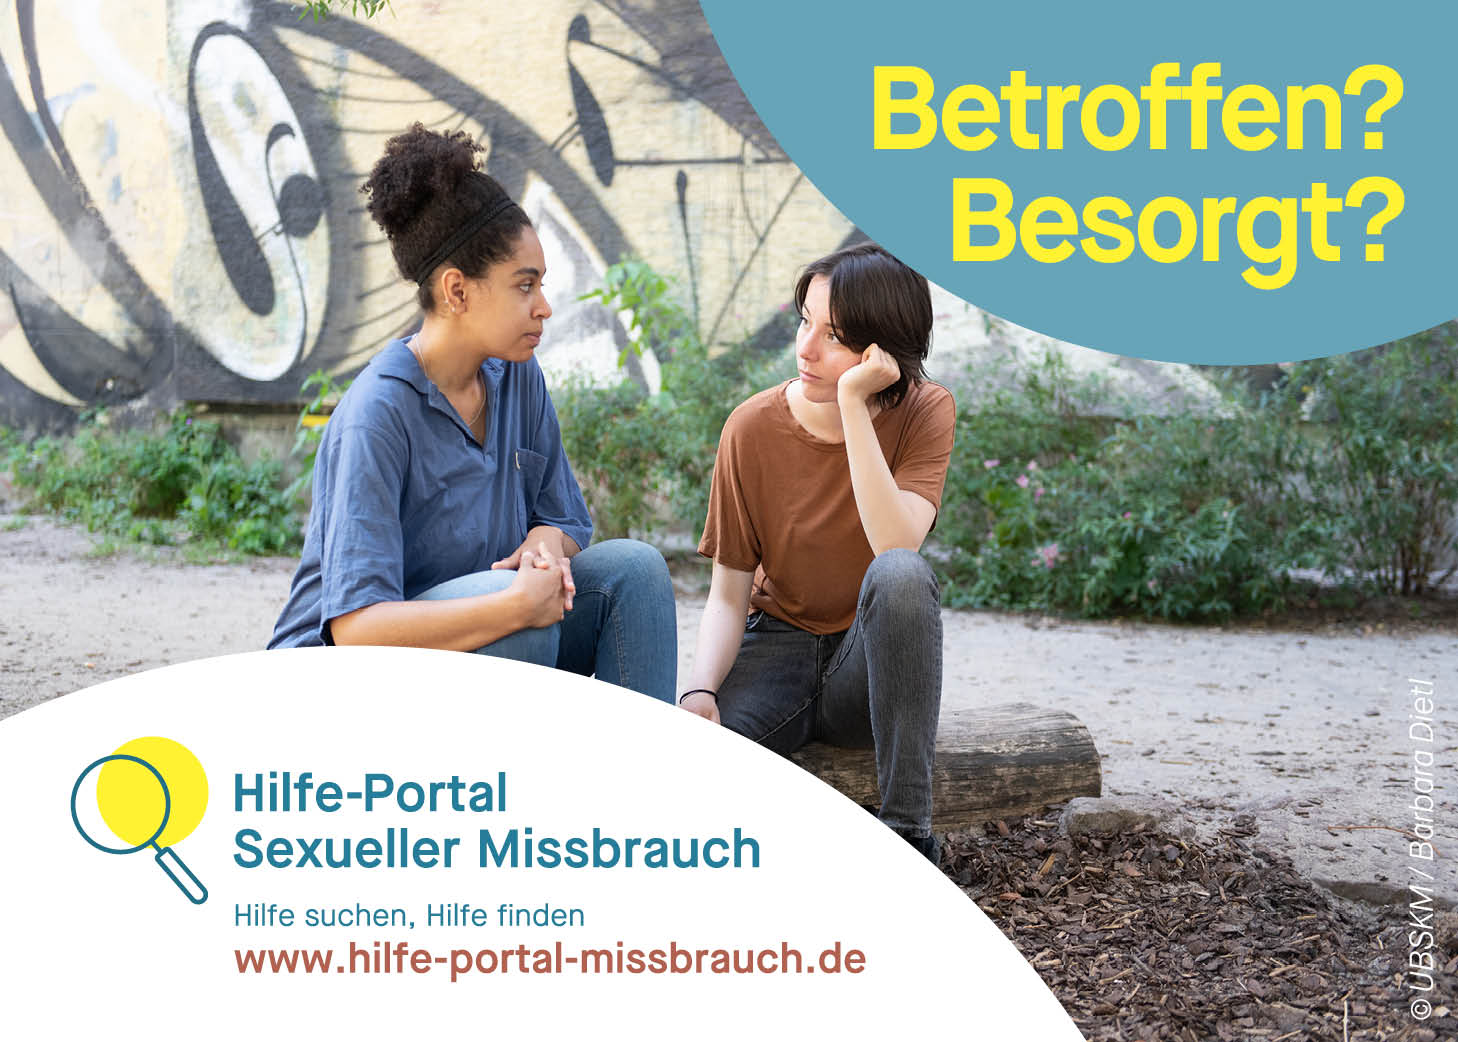 Hilfe-Portal Sexueller Missbrauch: www.hilfe-portal-missbrauch.de